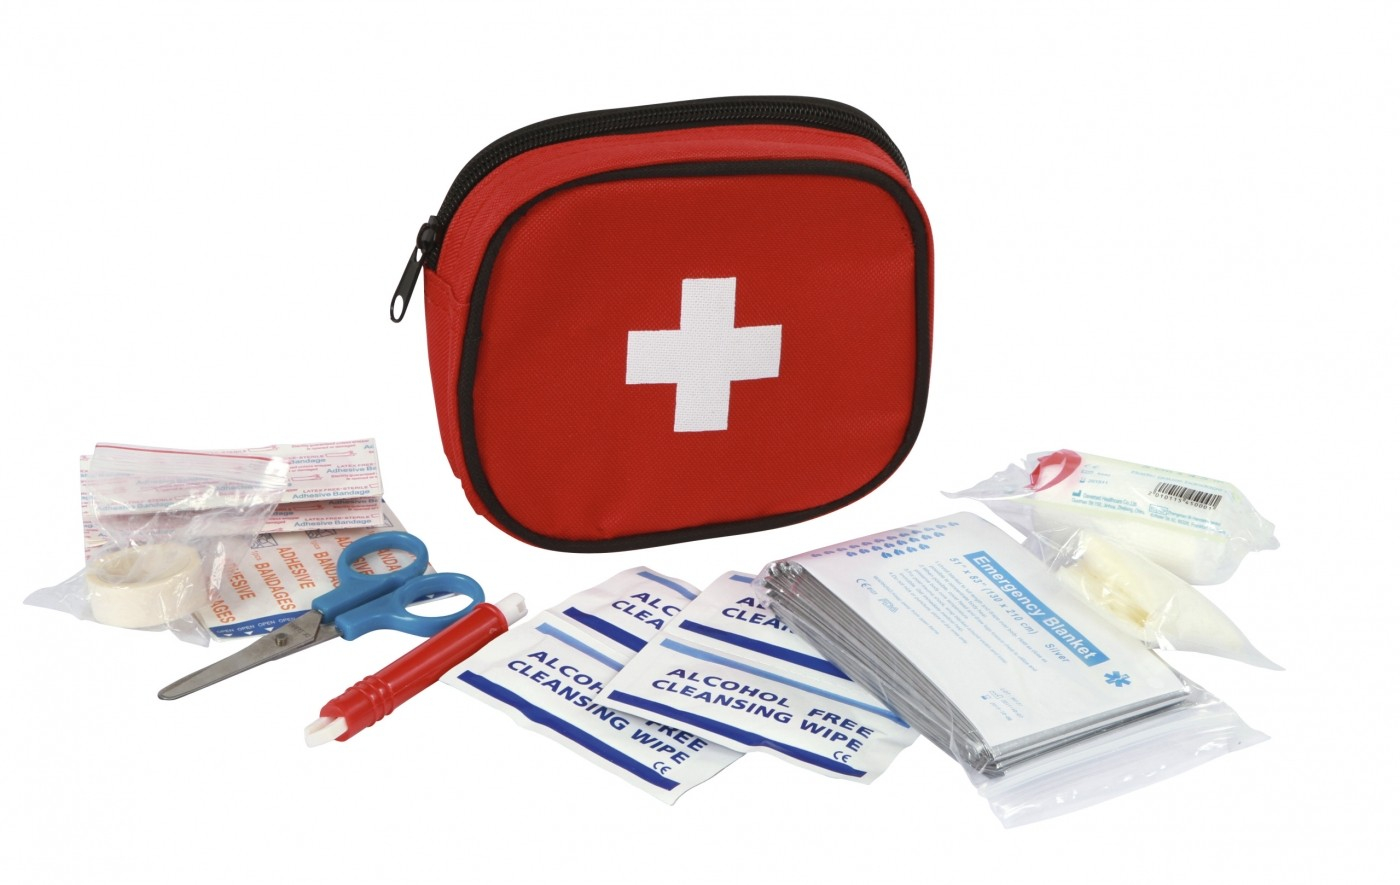 Kerbl First Aid kit - 14 stuks